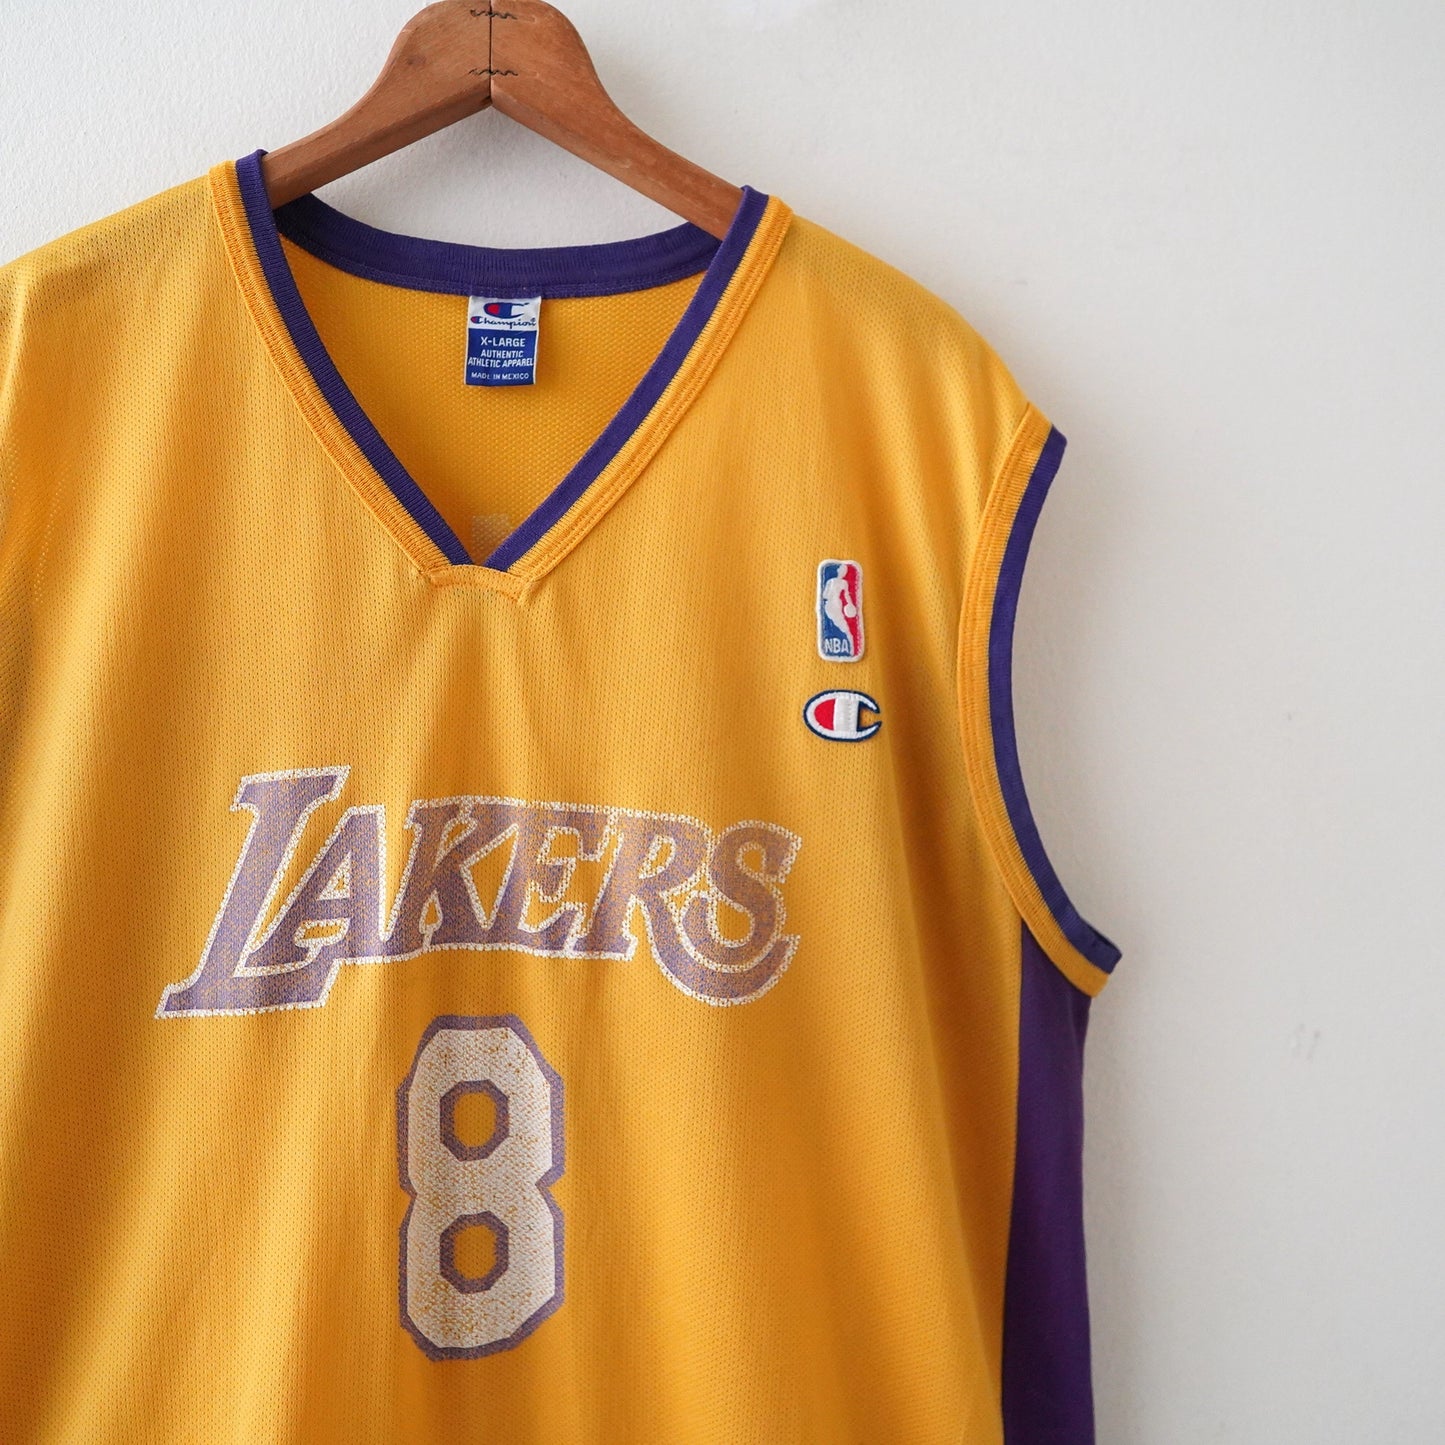 Champion Lakers game shirt